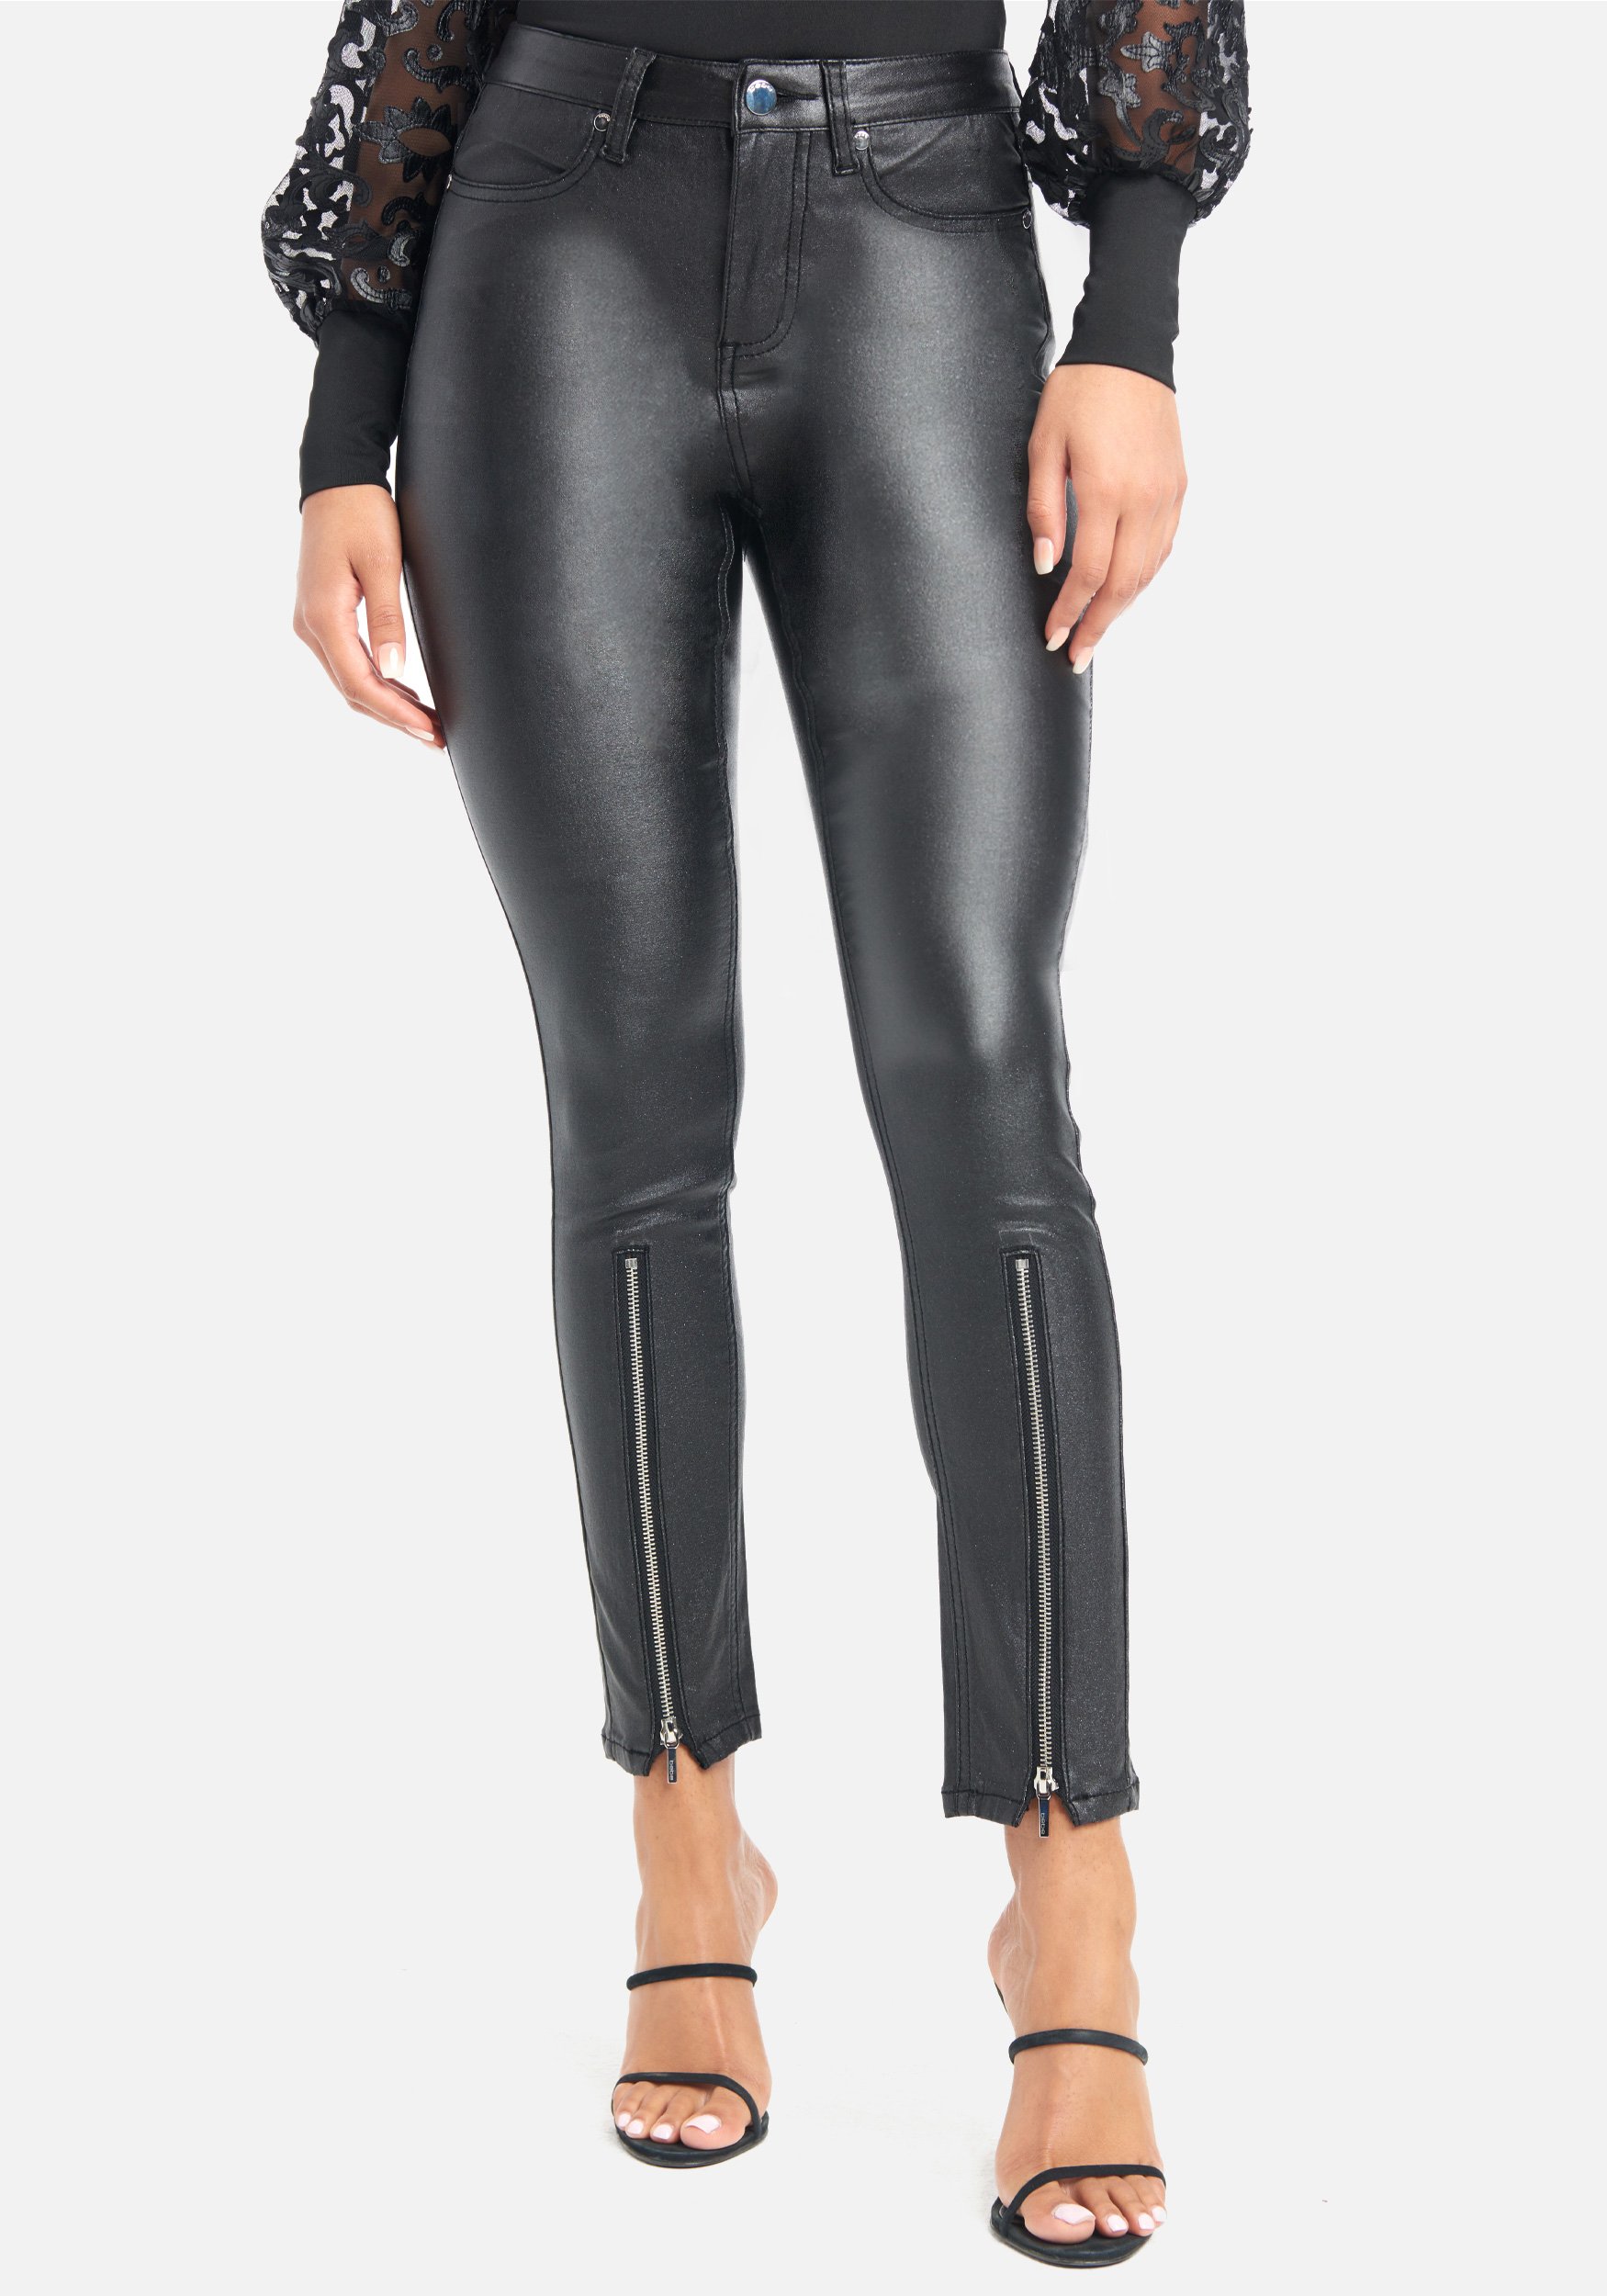 Bebe Women's Coated Glitter Skinny Jeans, Size 30 in Black Wash Spandex/Viscose